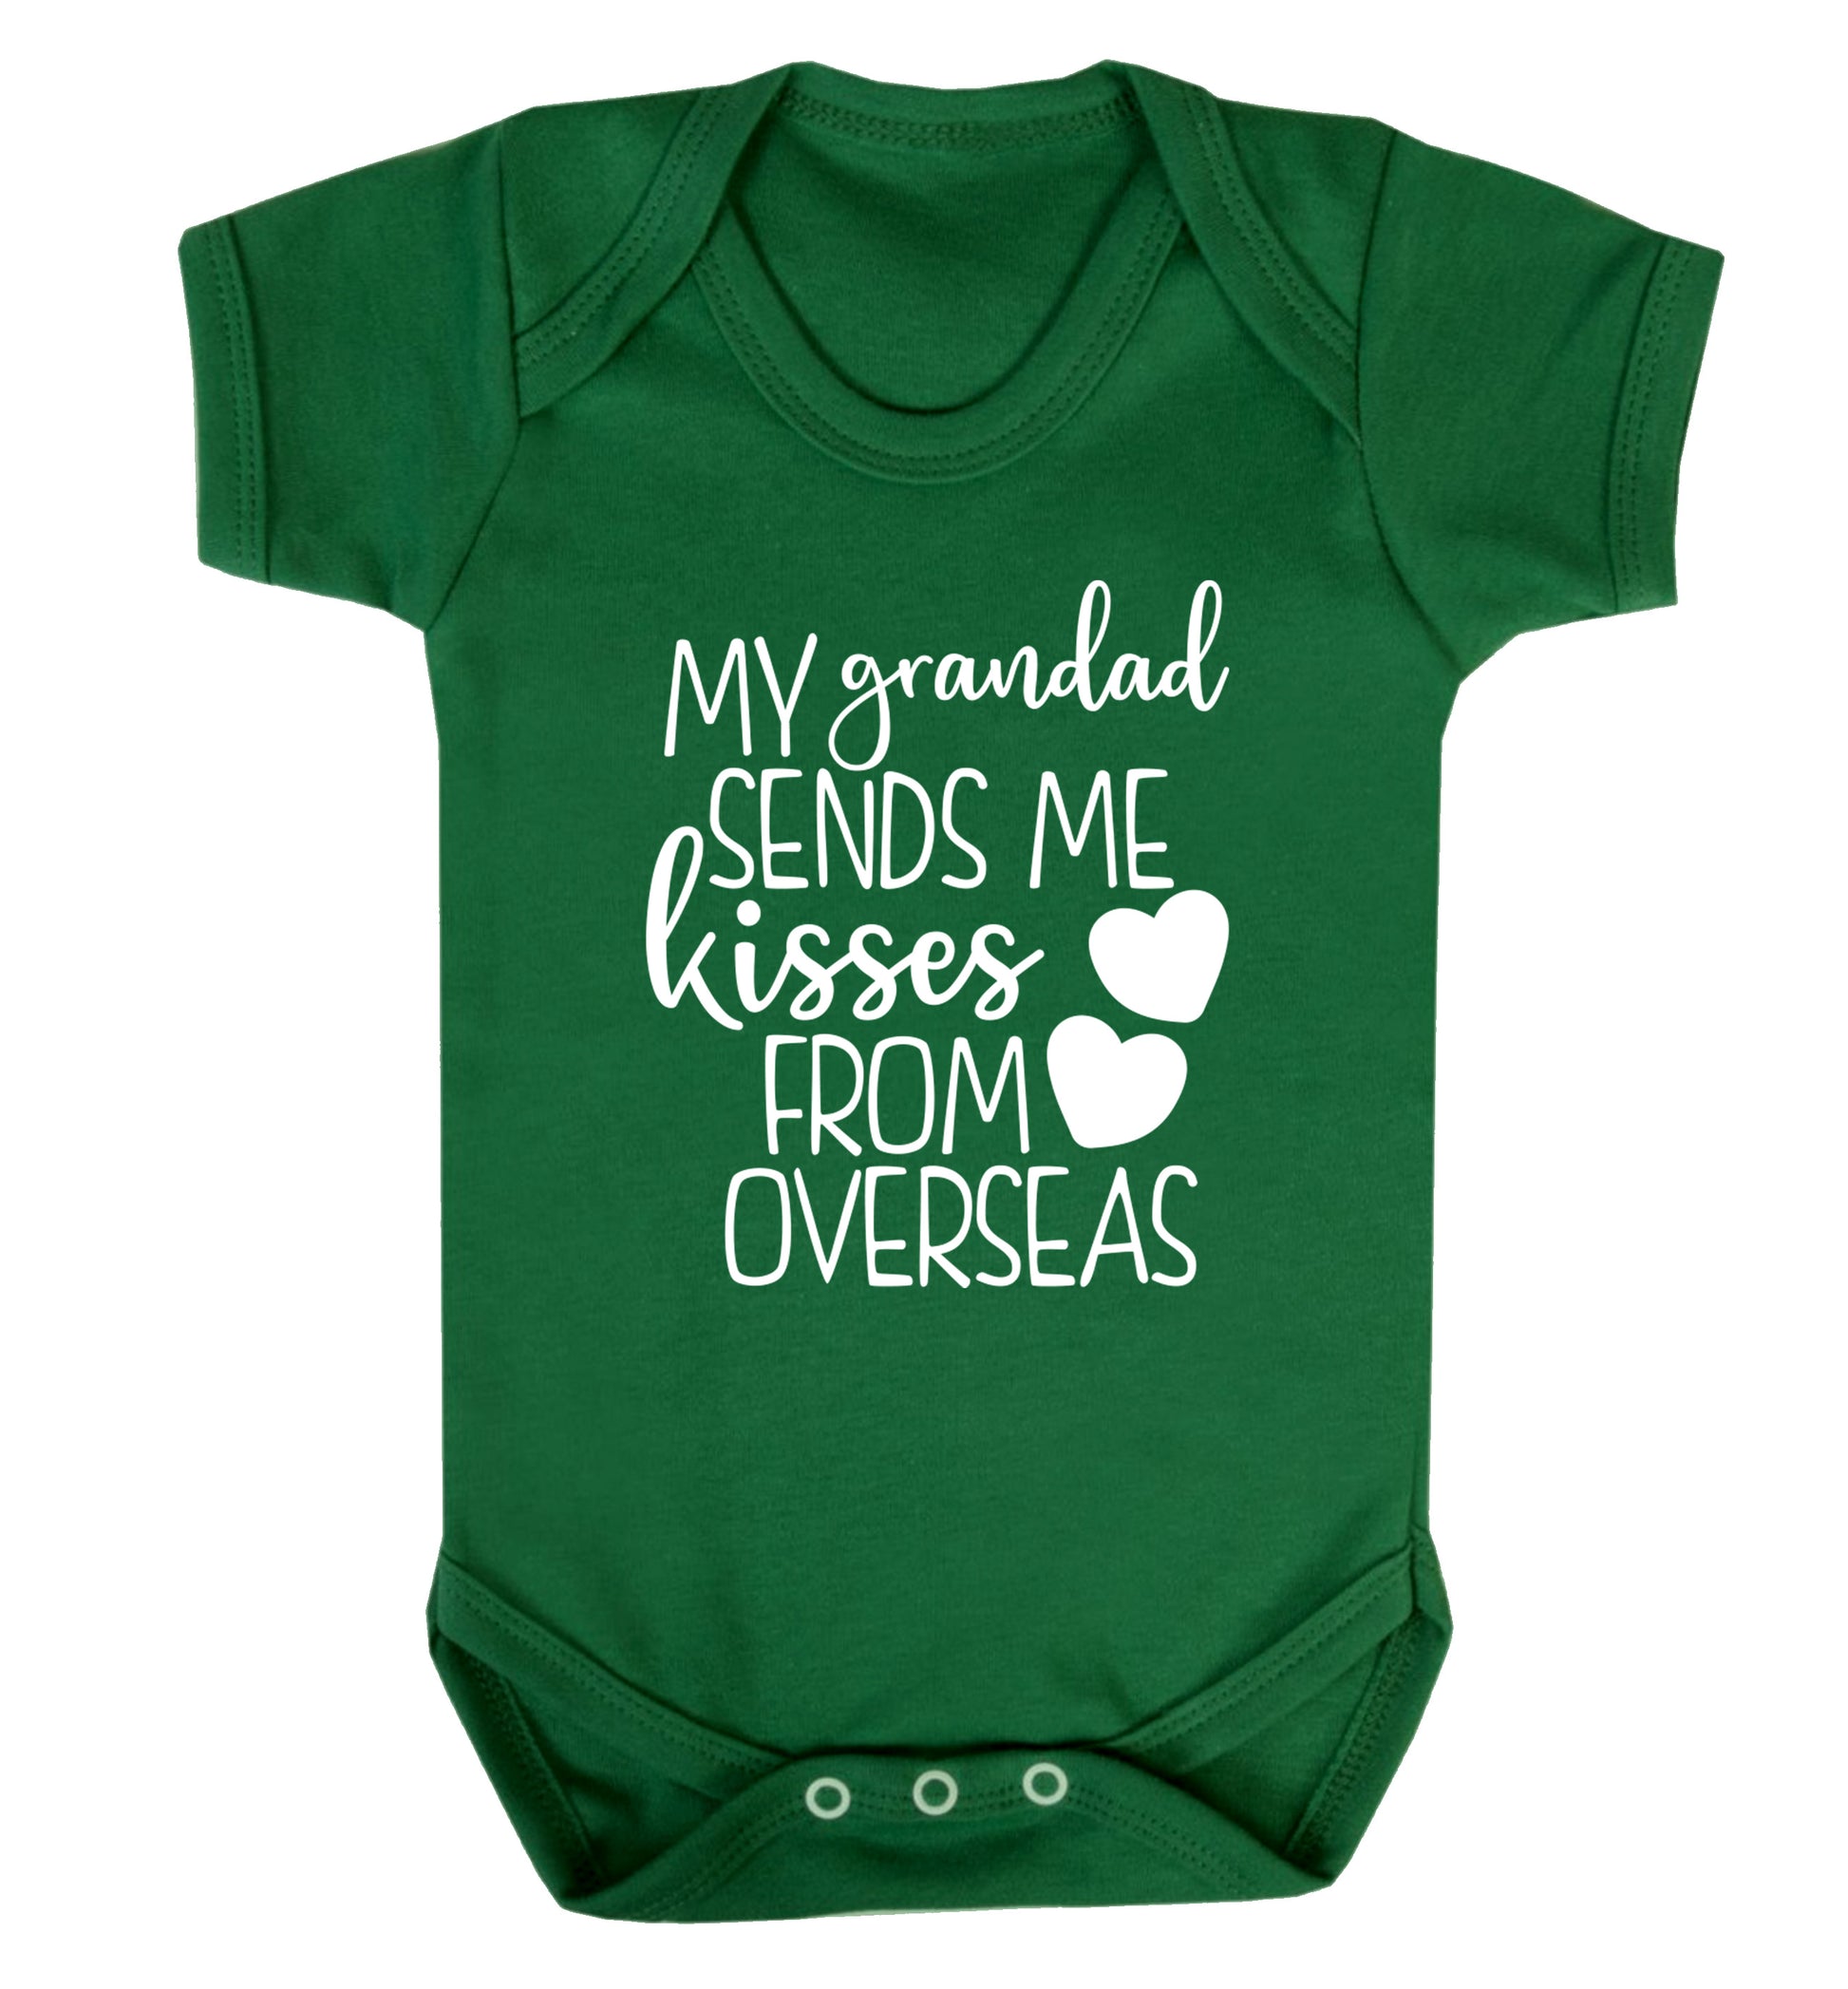 My Grandad sends me kisses from overseas Baby Vest green 18-24 months